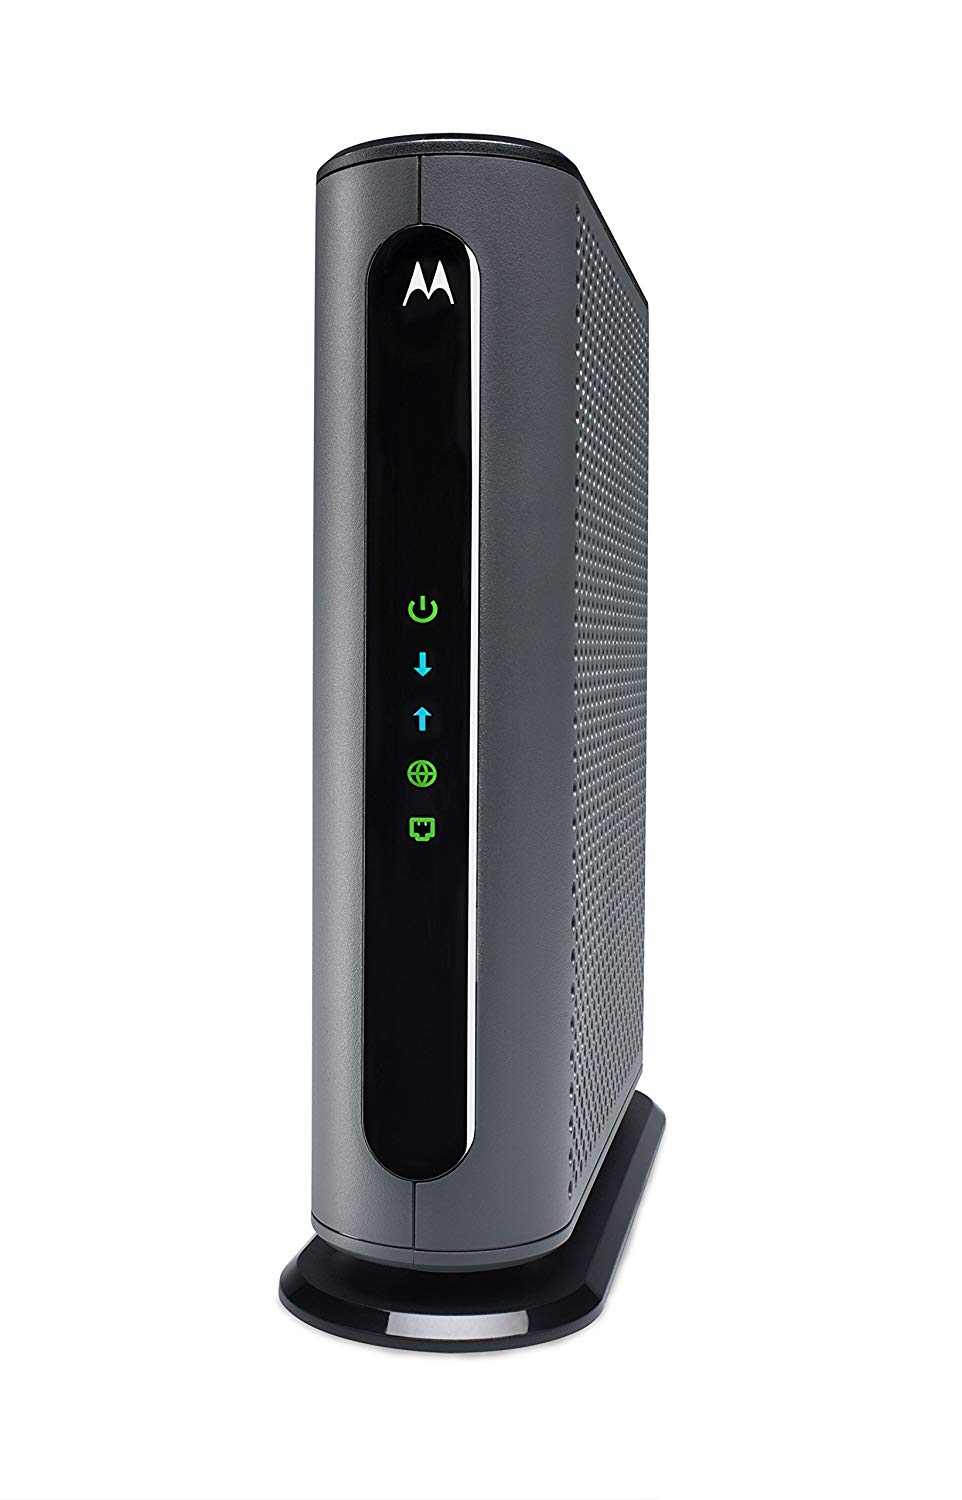 Motorola MB7621 Home WiFi Cable Modem